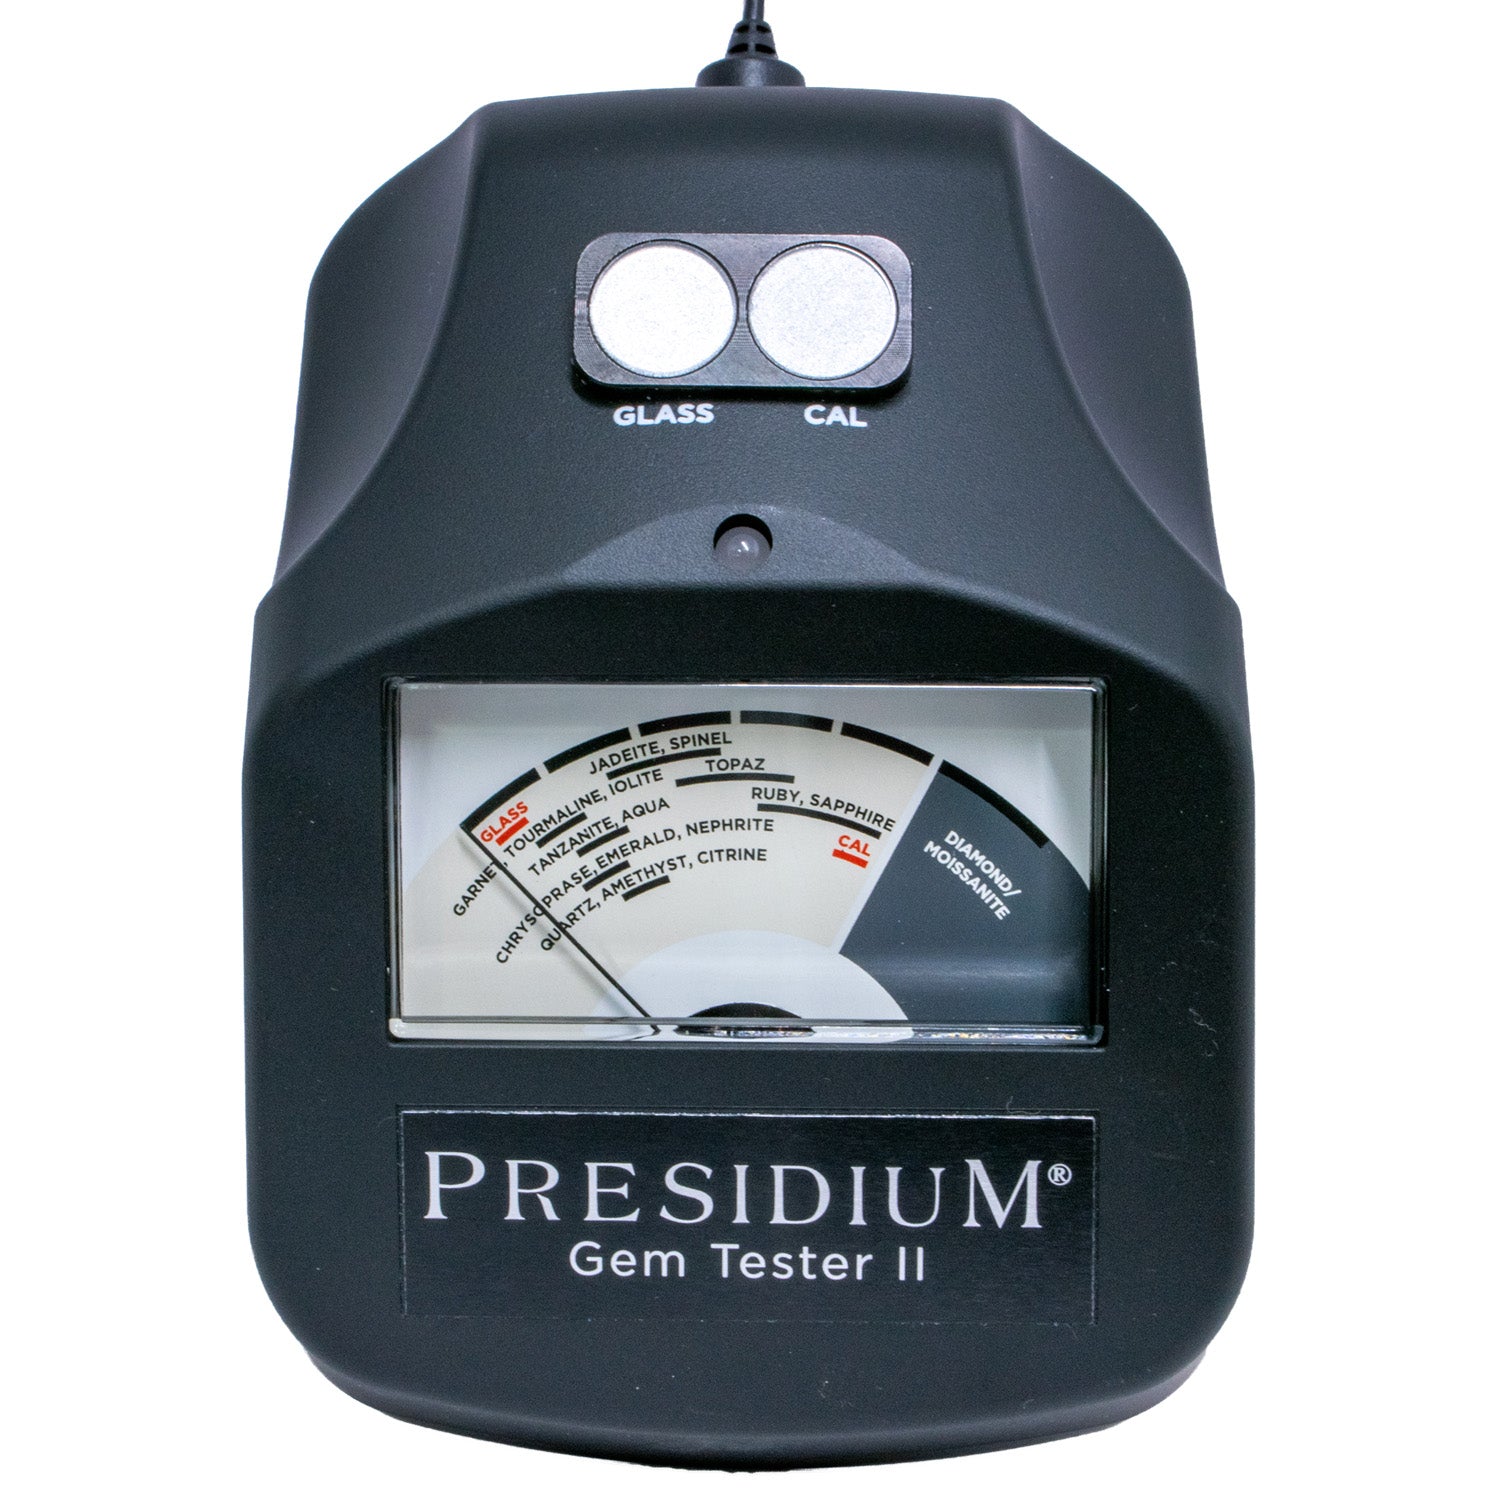 Standard Presidium Electronic Gem Tester (model PGT II)